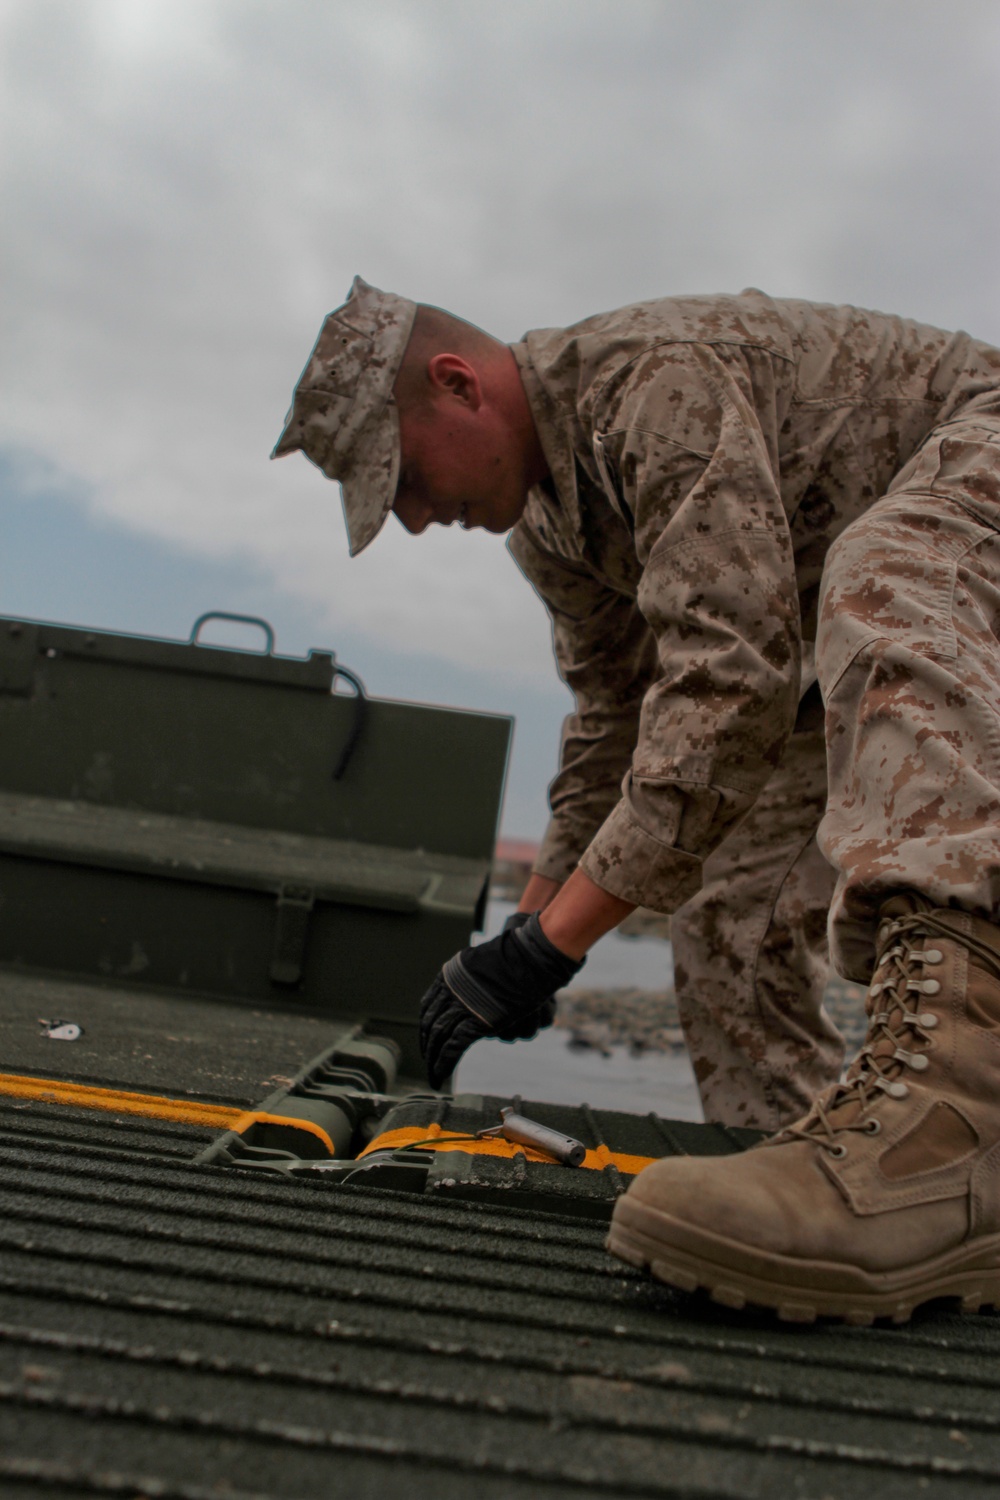 No river wide enough: Marines demonstrate bridging capabilities